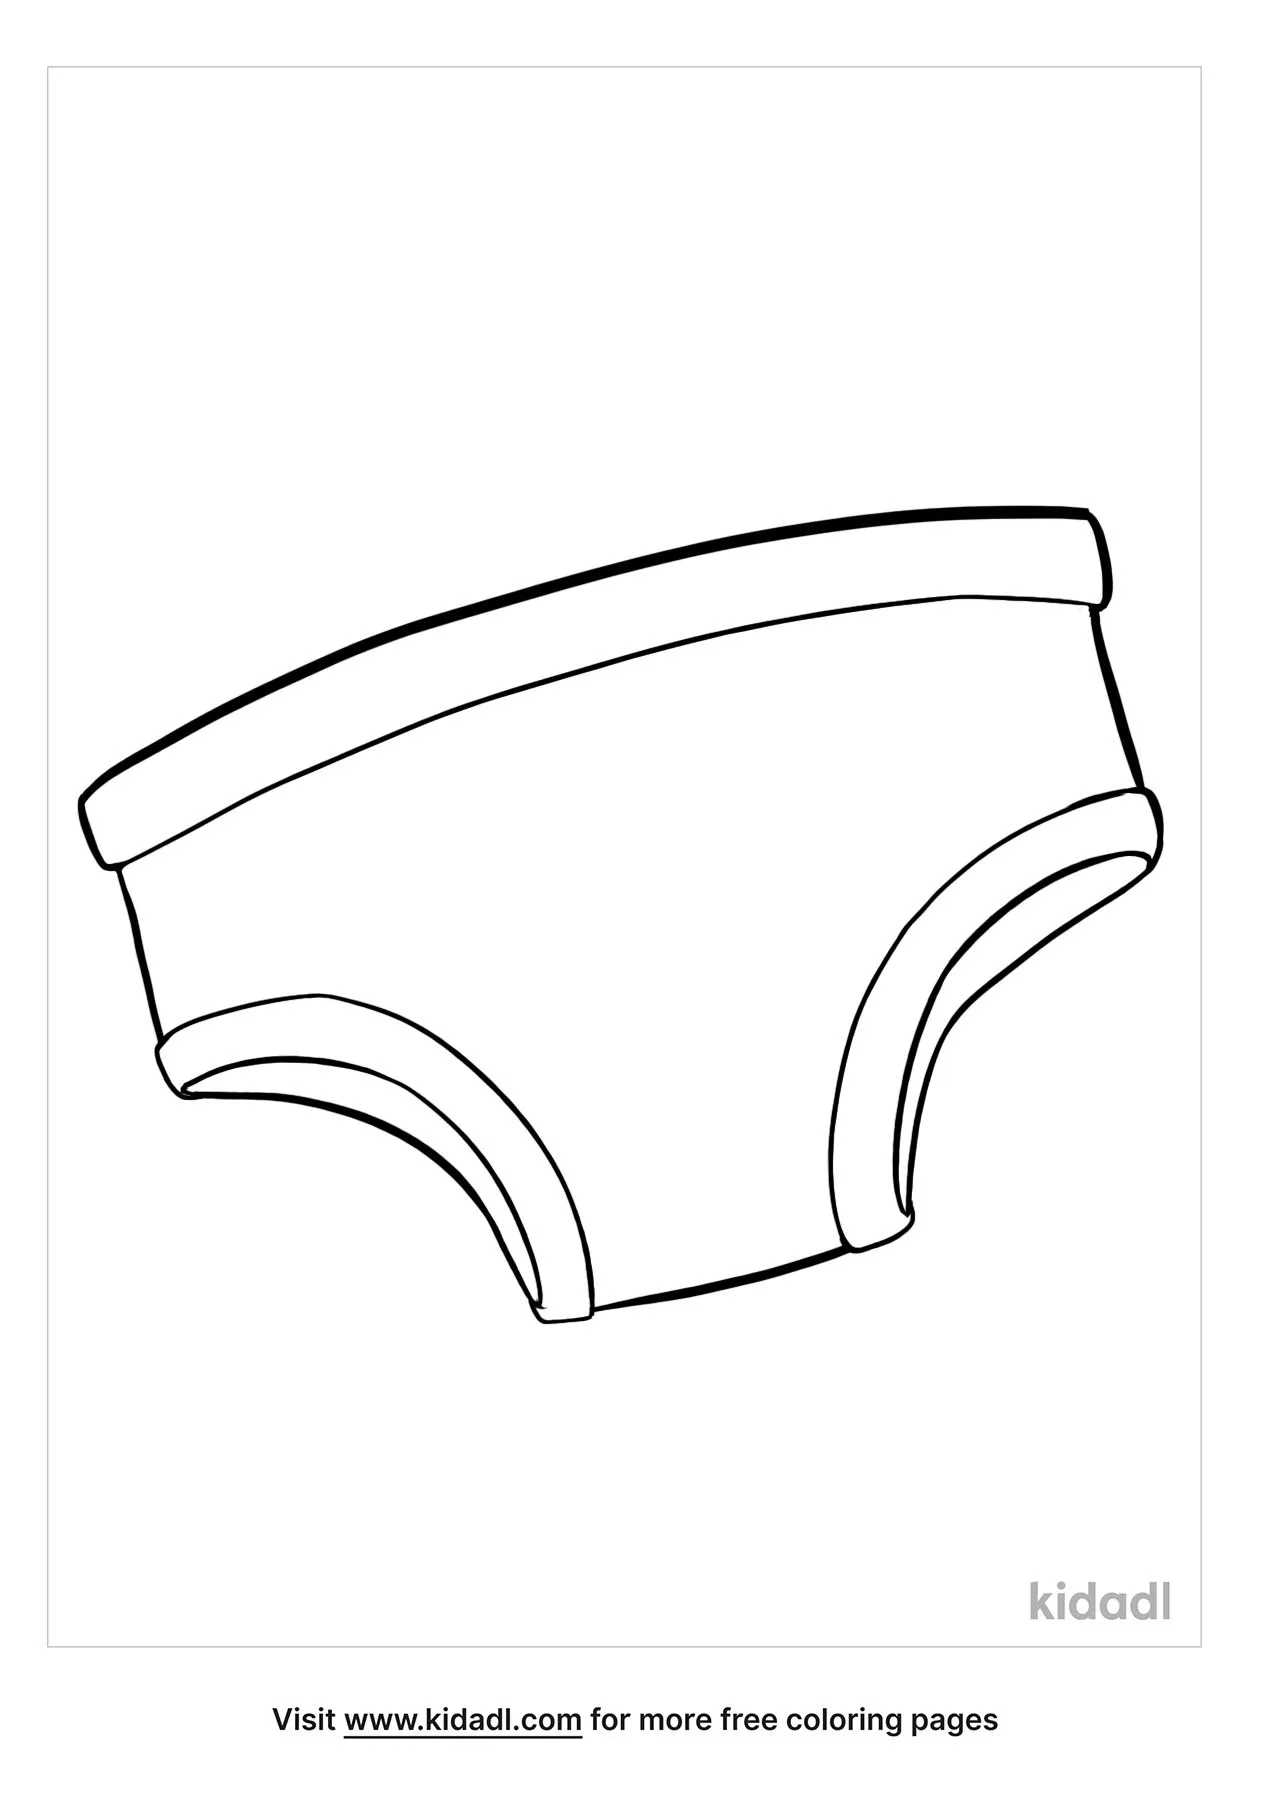 Free underwear coloring page coloring page printables